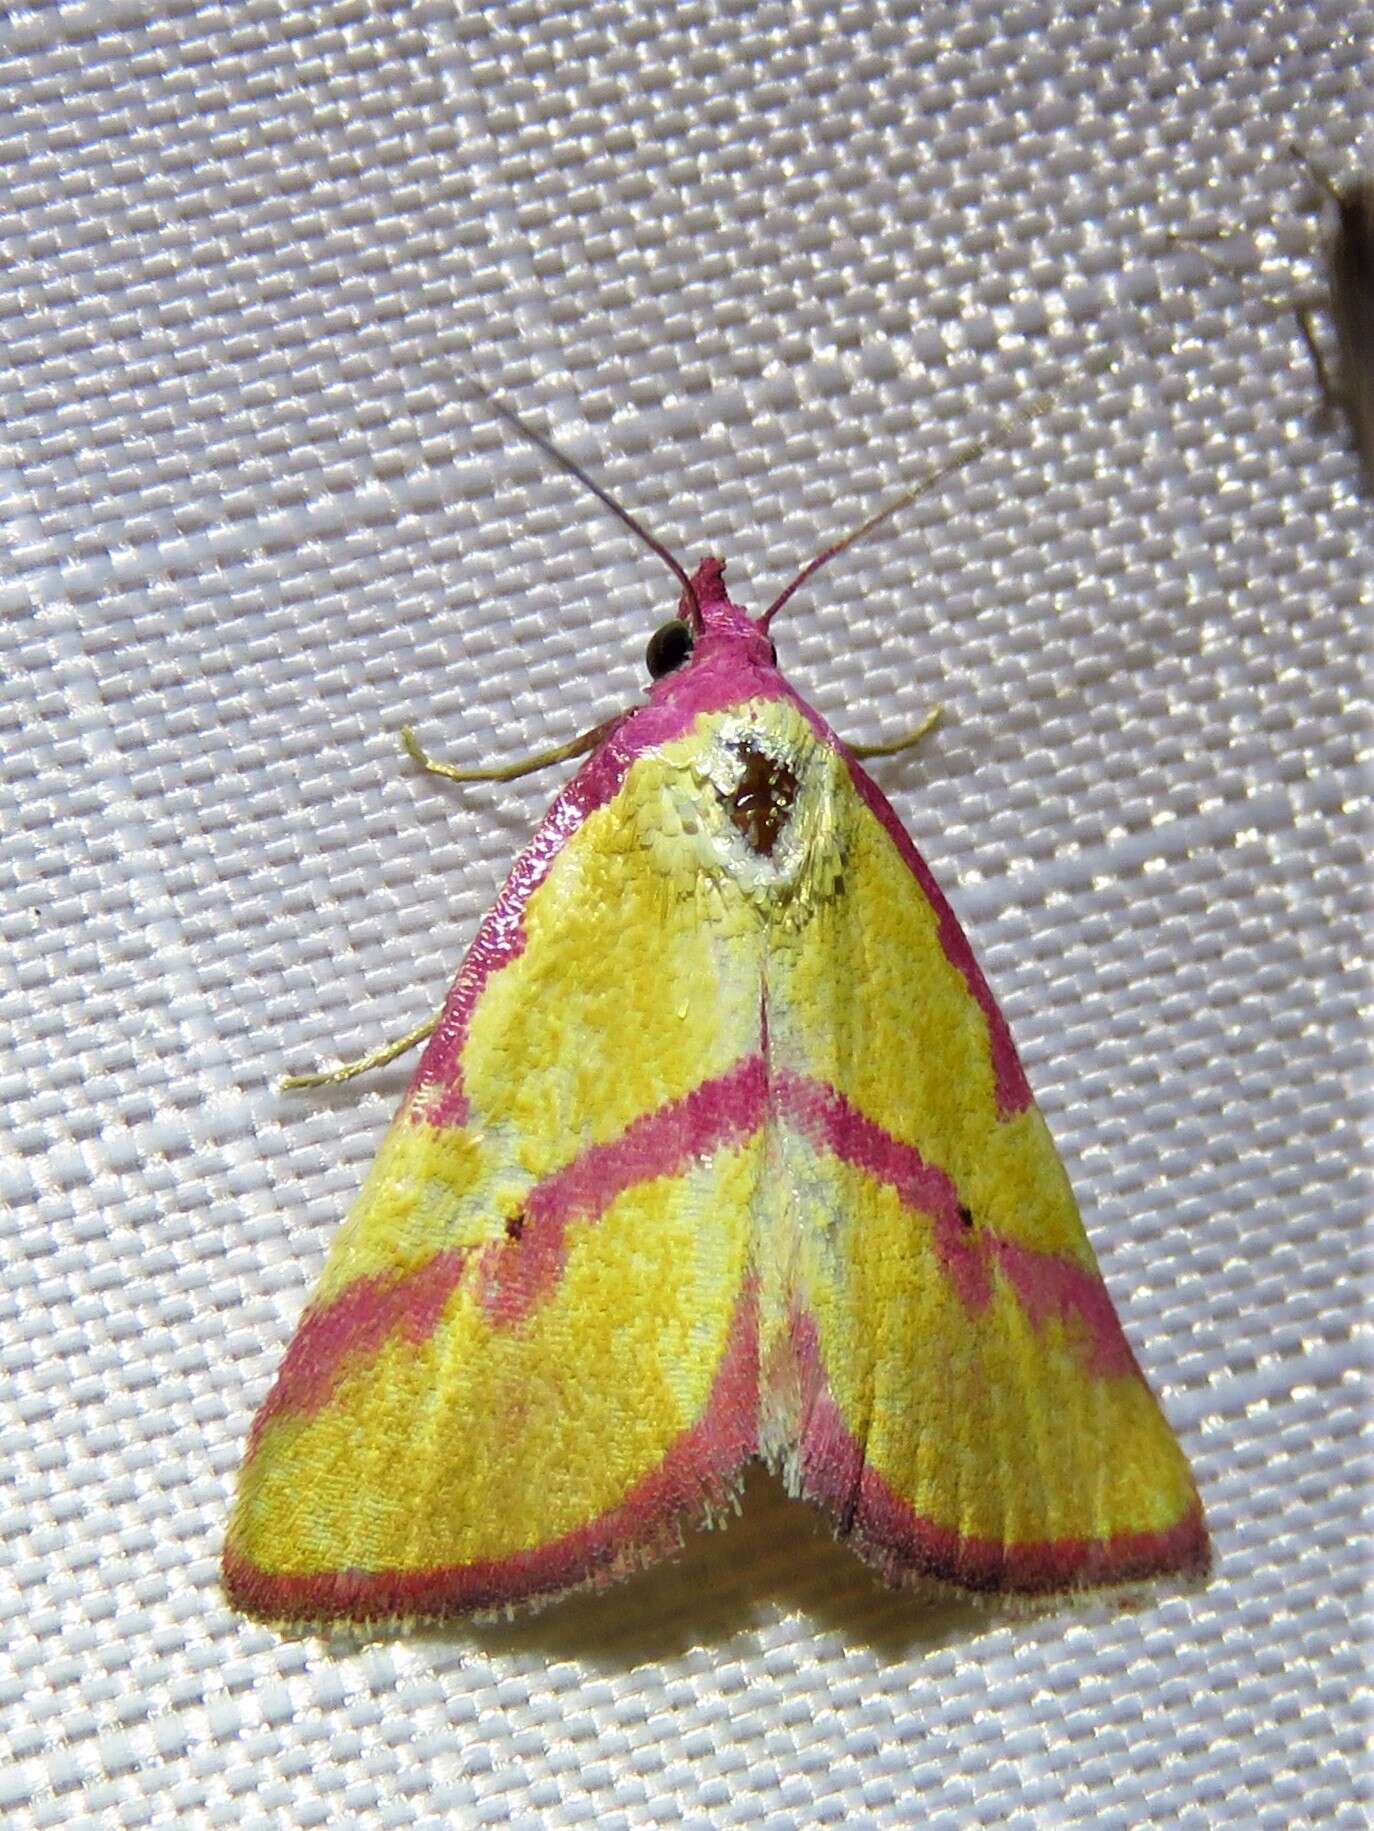 Image of Ernestine's Moth